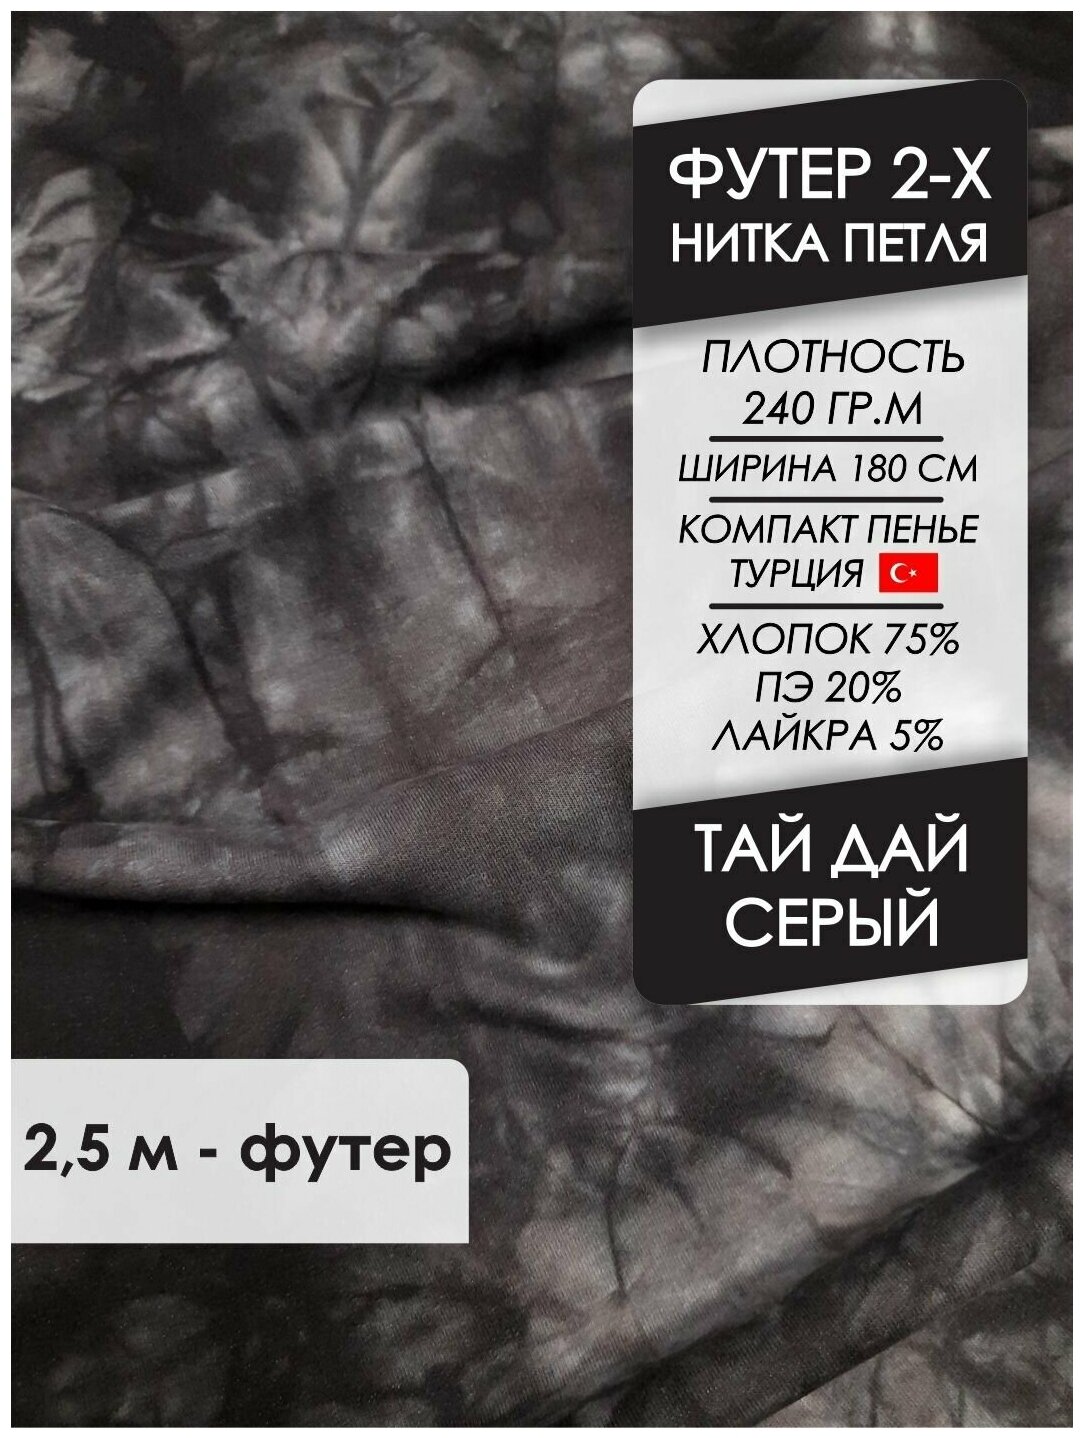 Ткань премиум Футер петля 2х нитка Тай дай серый, отрез 2,5х1,8 м — купить  в интернет-магазине по низкой цене на Яндекс Маркете